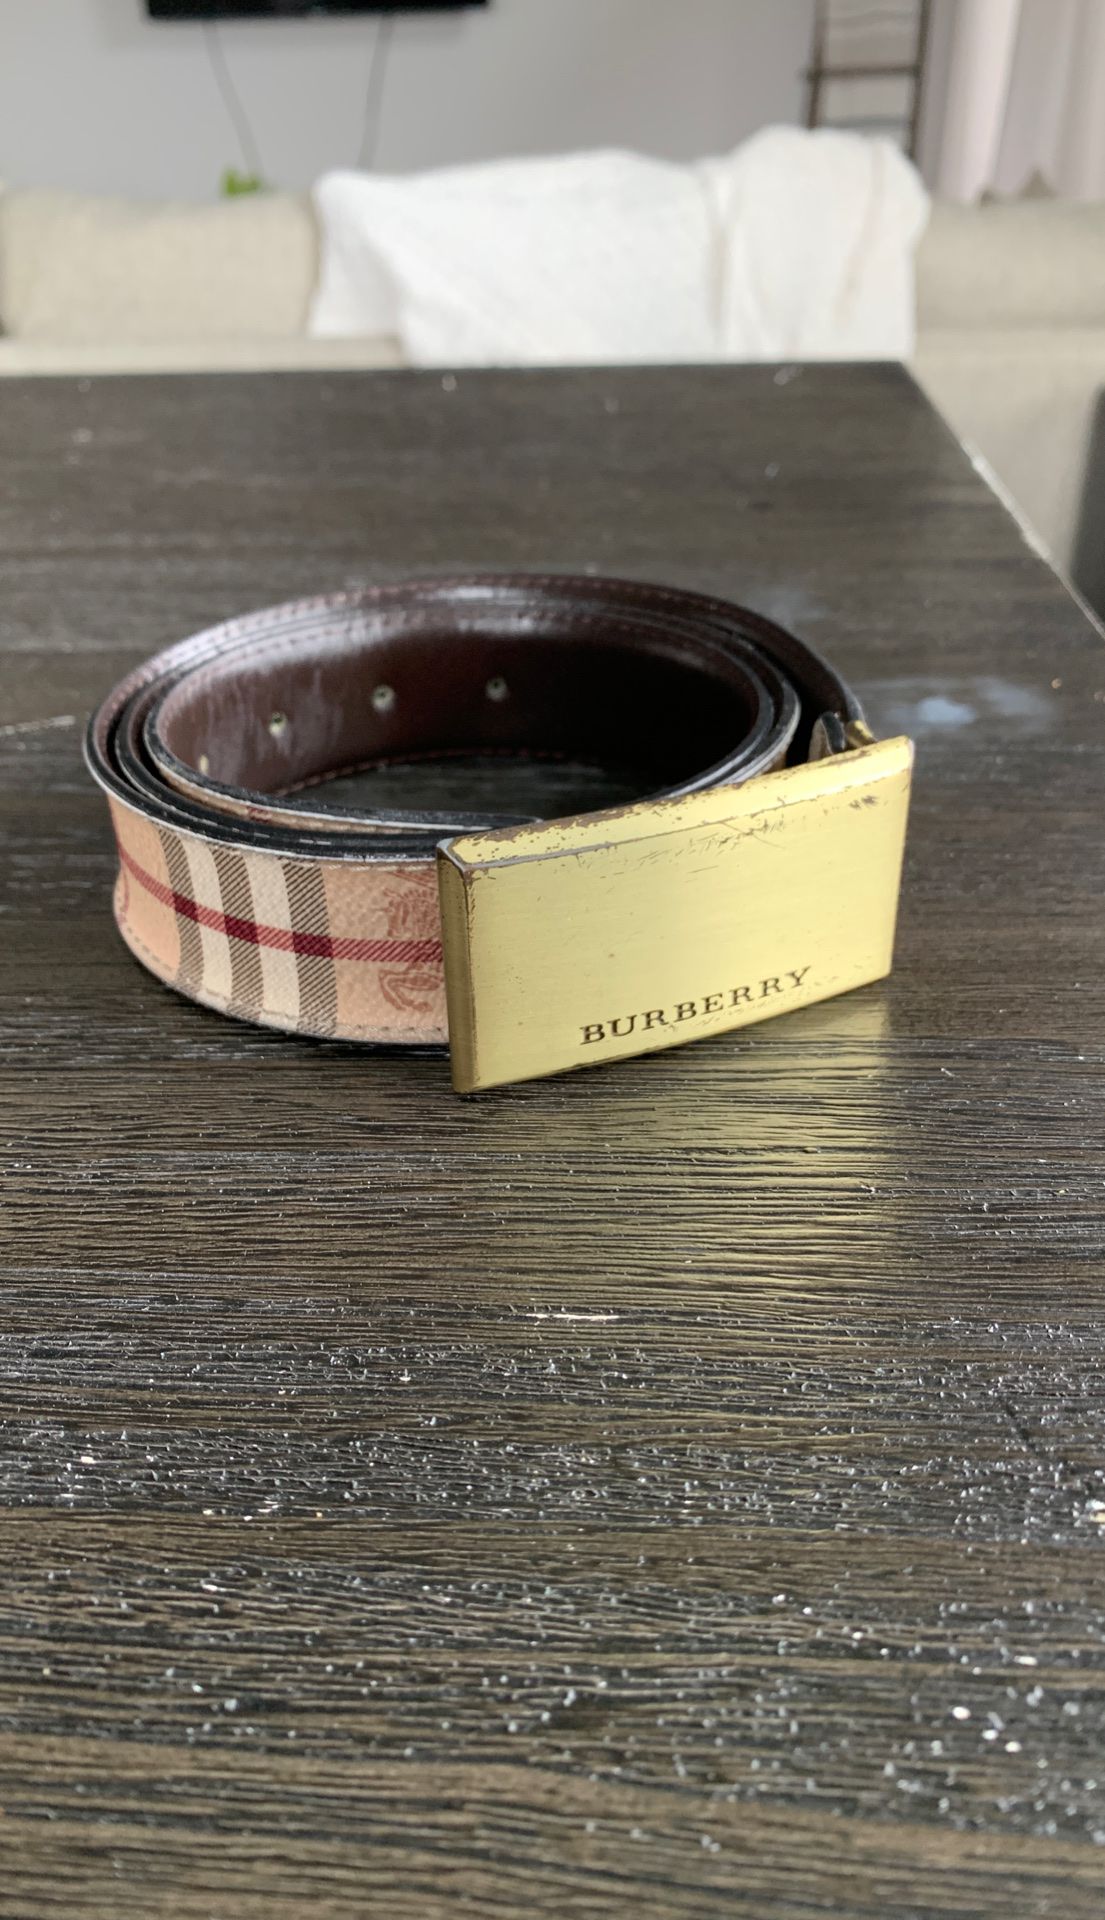 Burberry belt size 38/95